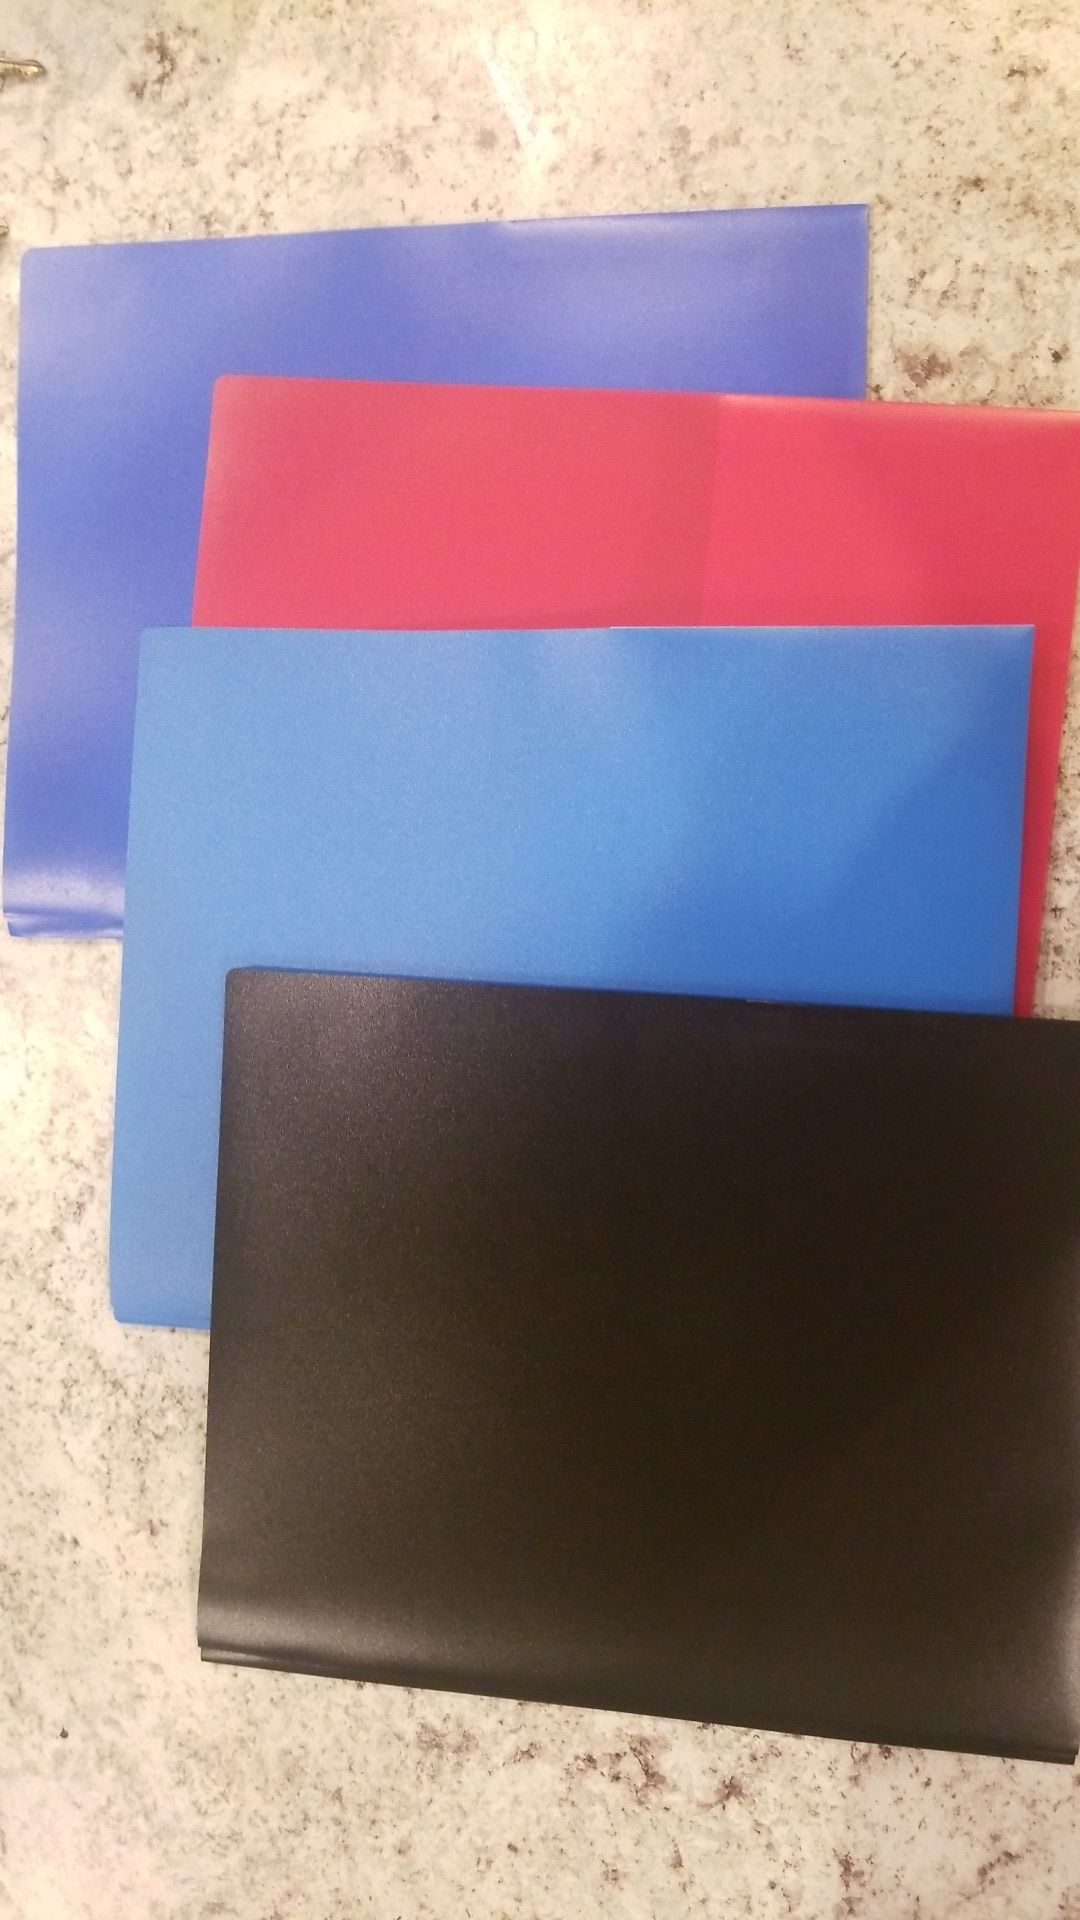 Pocket folder with brads (4)